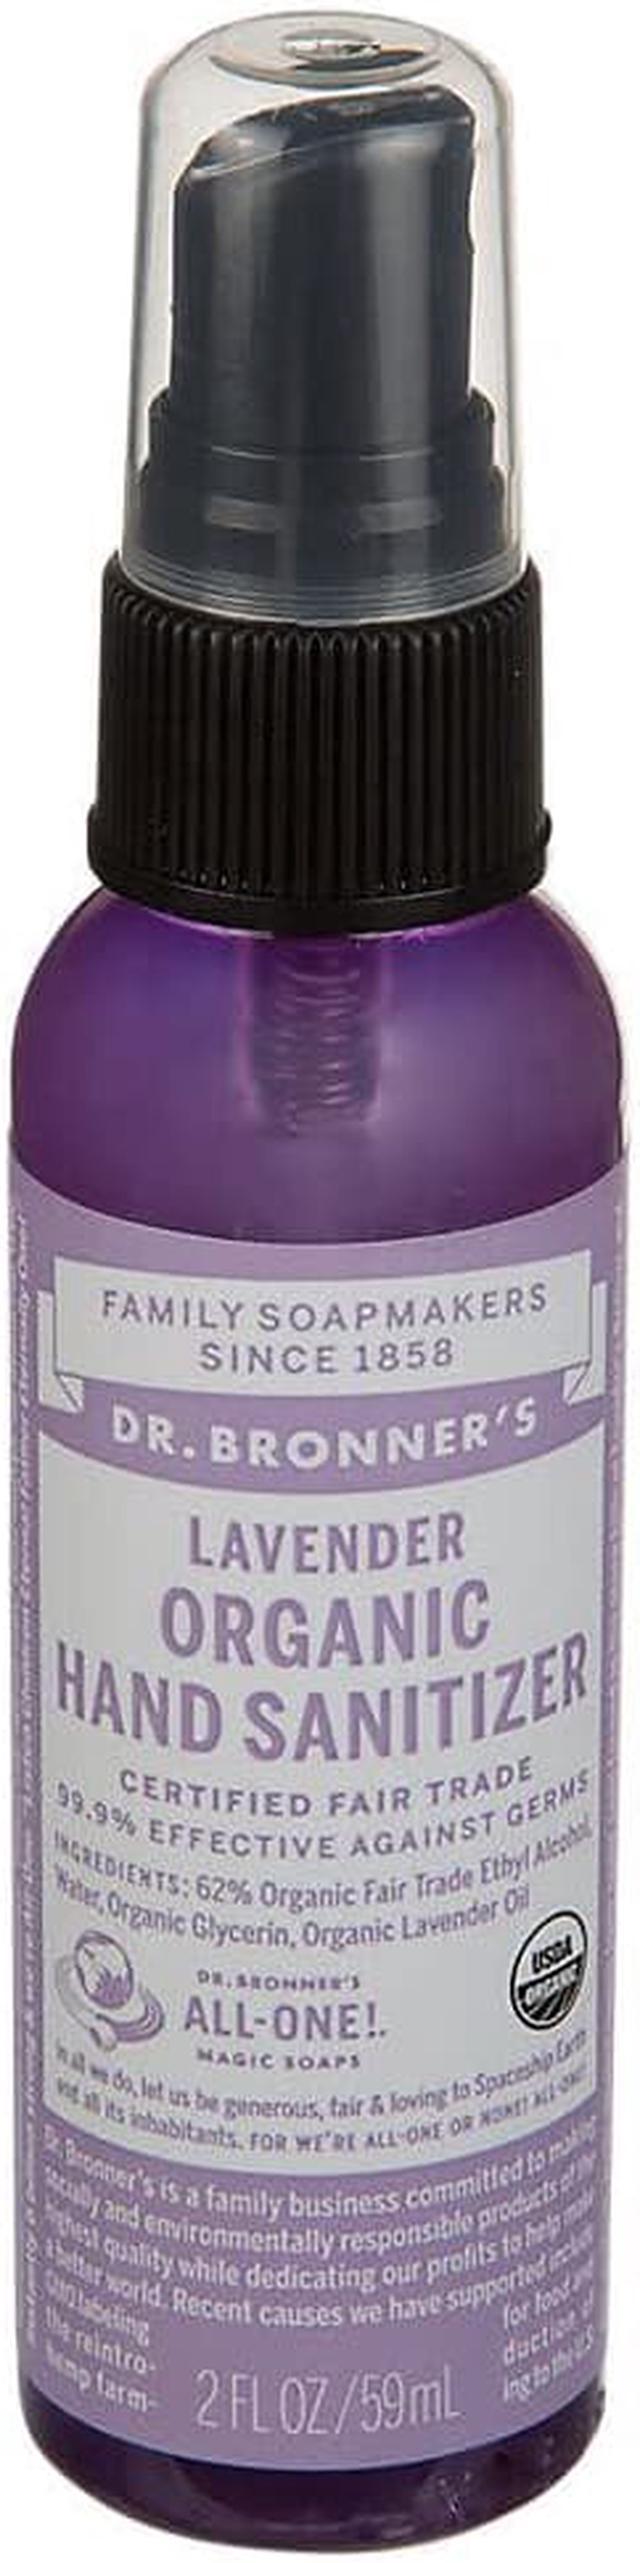 Dr Bronners Hand Sanitizer, Organic, Lavender - 2 fl oz